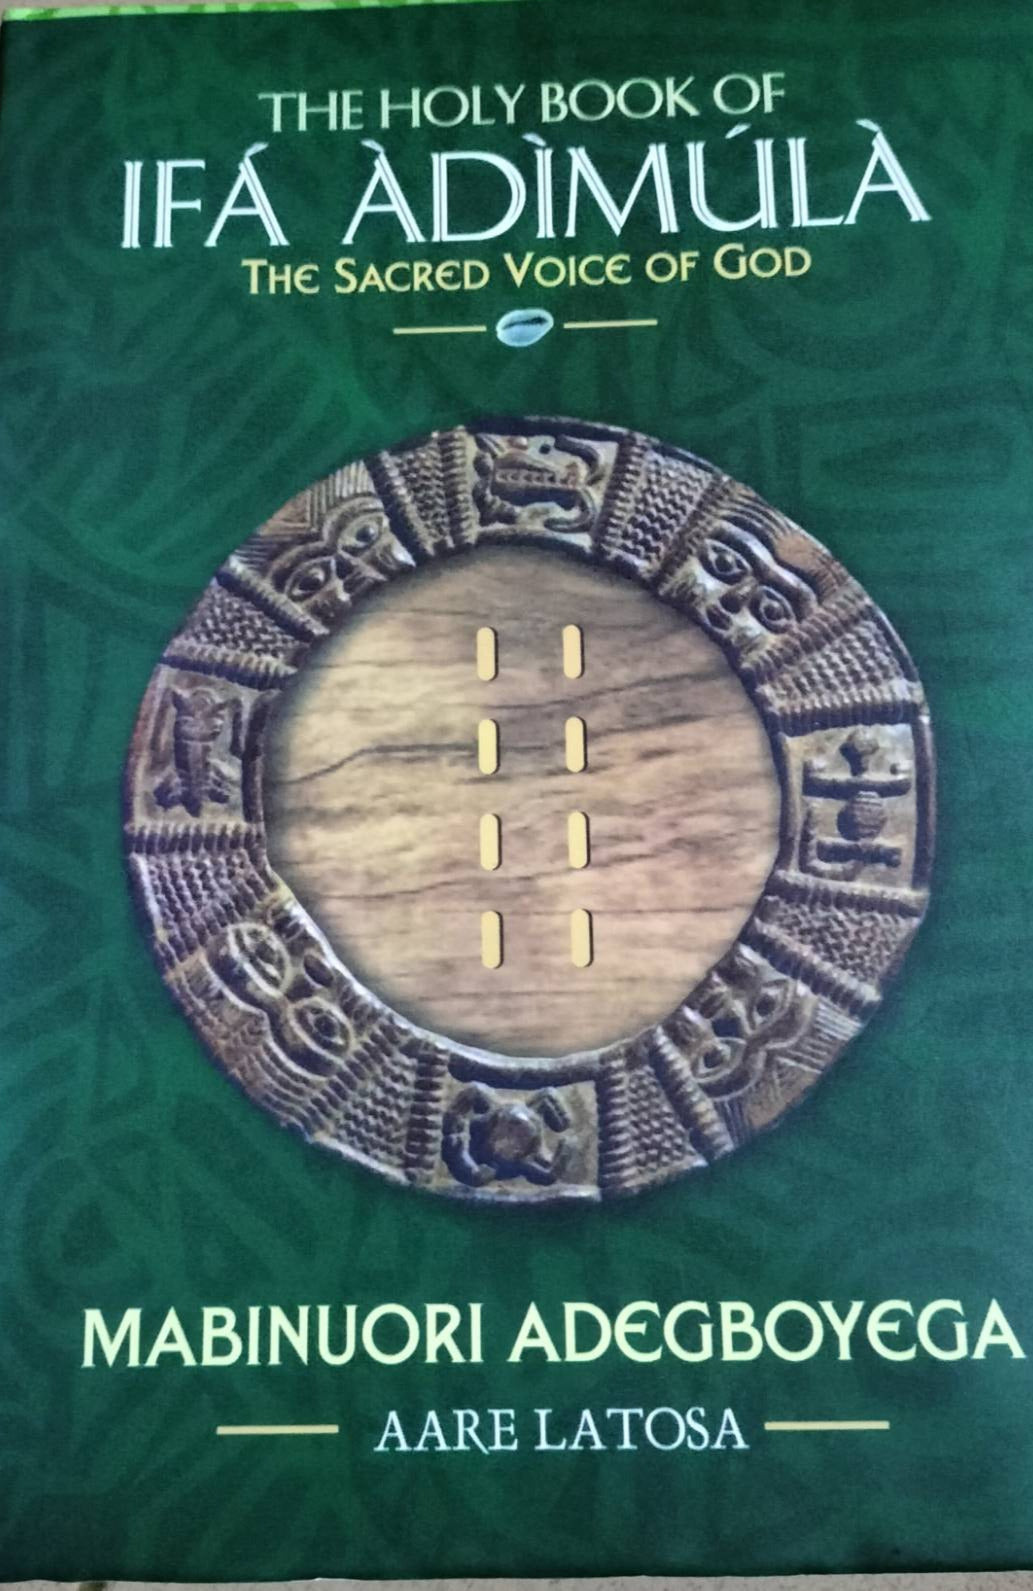 The Holy Book of Ifa Adimula